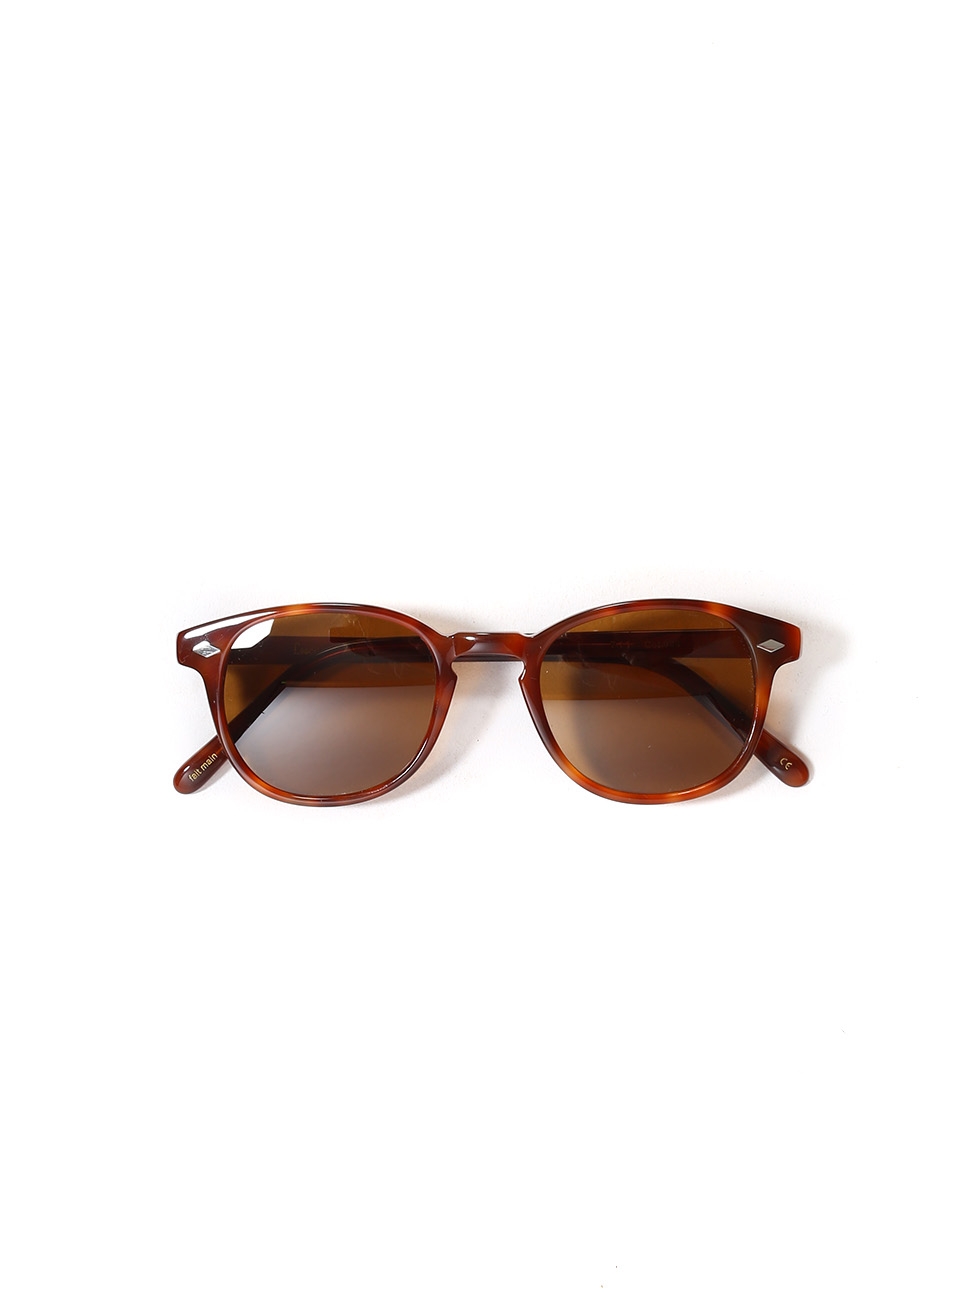 Boutique LESCA LUNETIER LA 711 camel tortoiseshell frame luxury sunglasses  with brown lenses Retail price €260 NEW